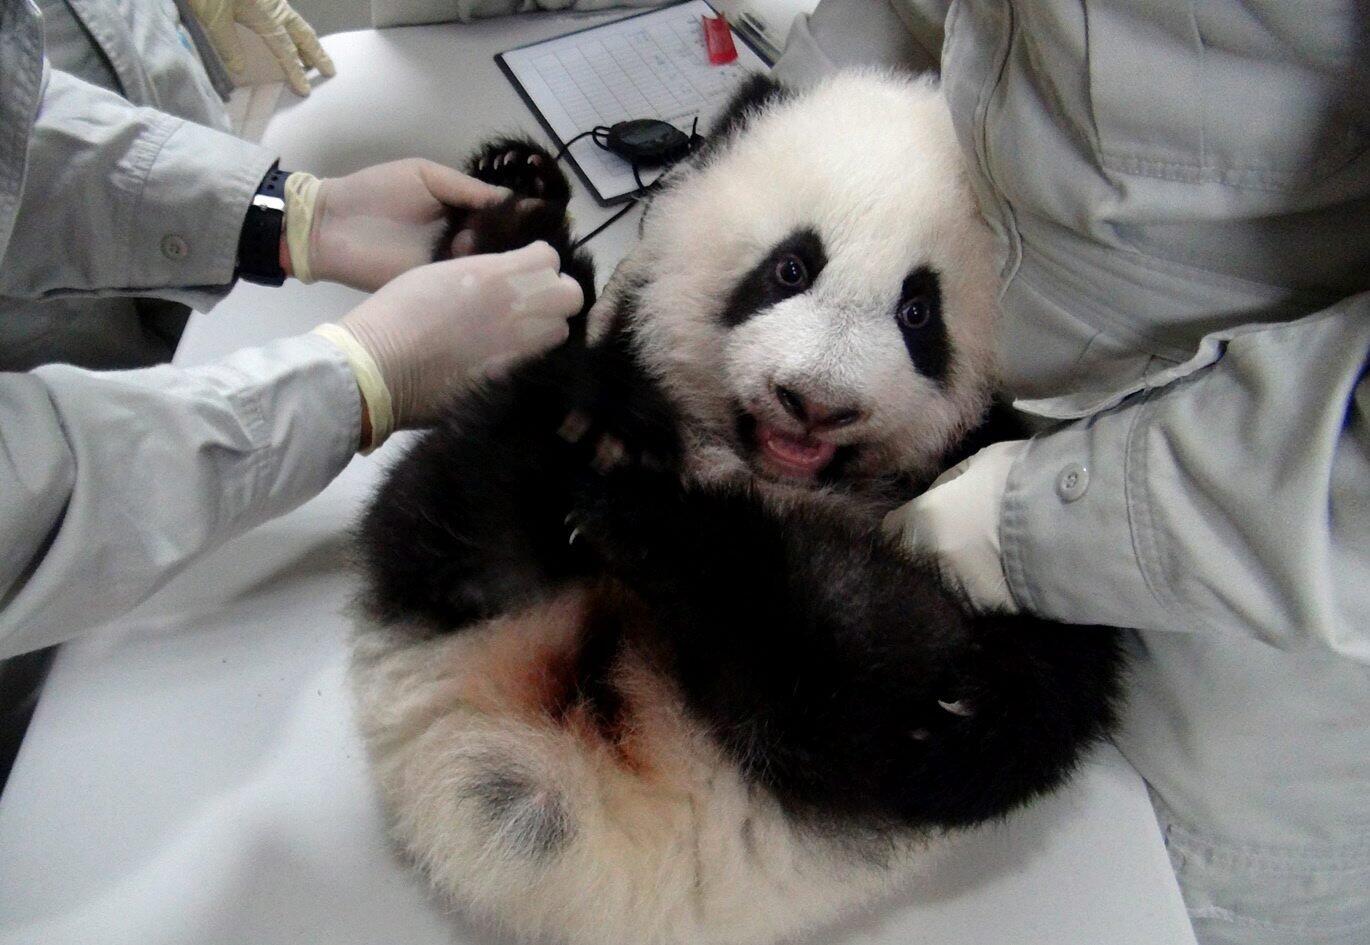 At Taipei Zoo in Taiwan, panda cub Yuan Zai thrives. The cub was born July 6.